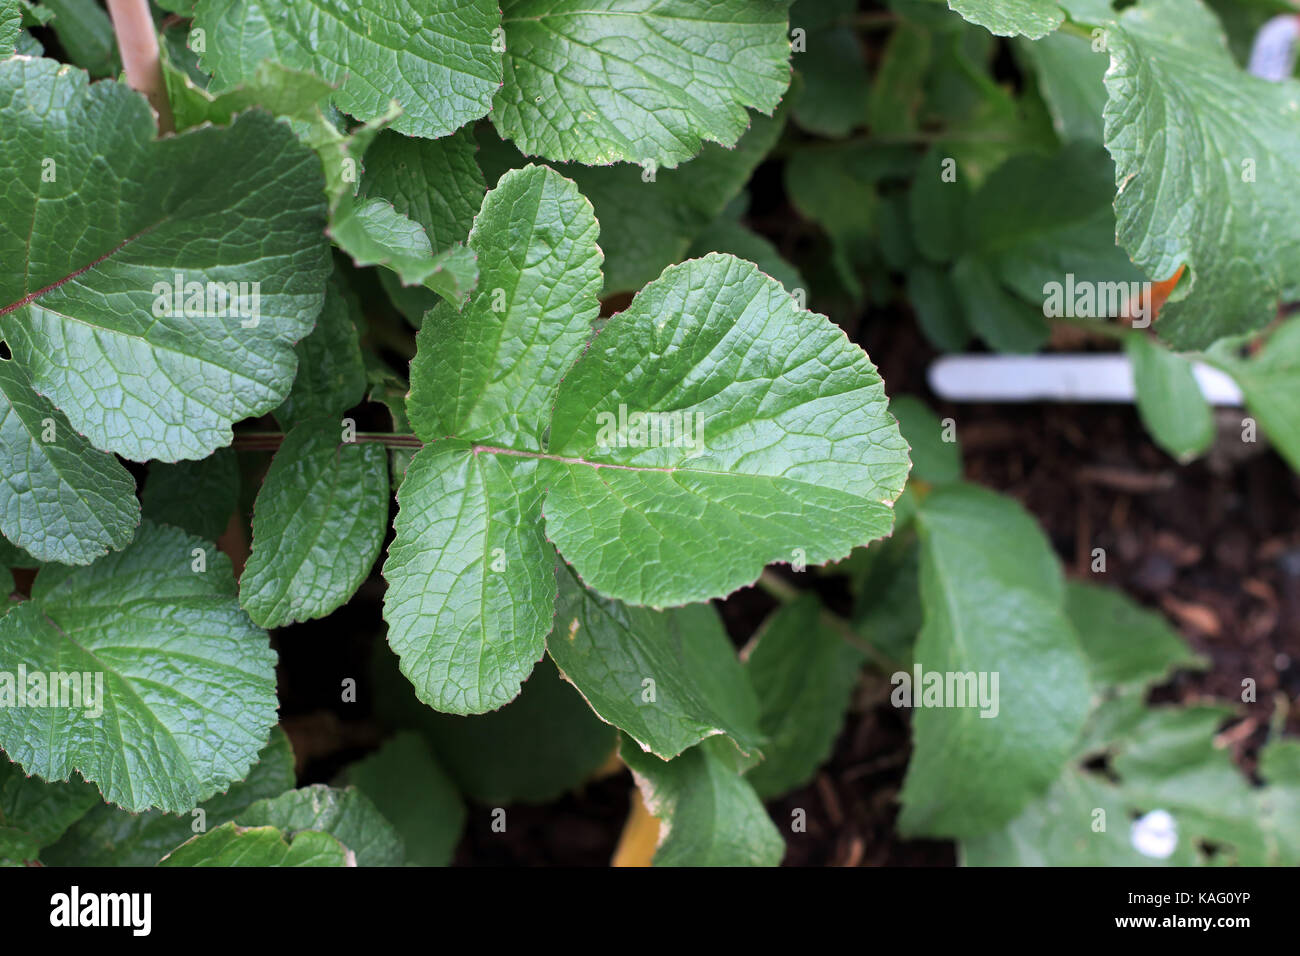 Raphanus raphanistrum or known as Radish healthy looking leaves Stock Photo